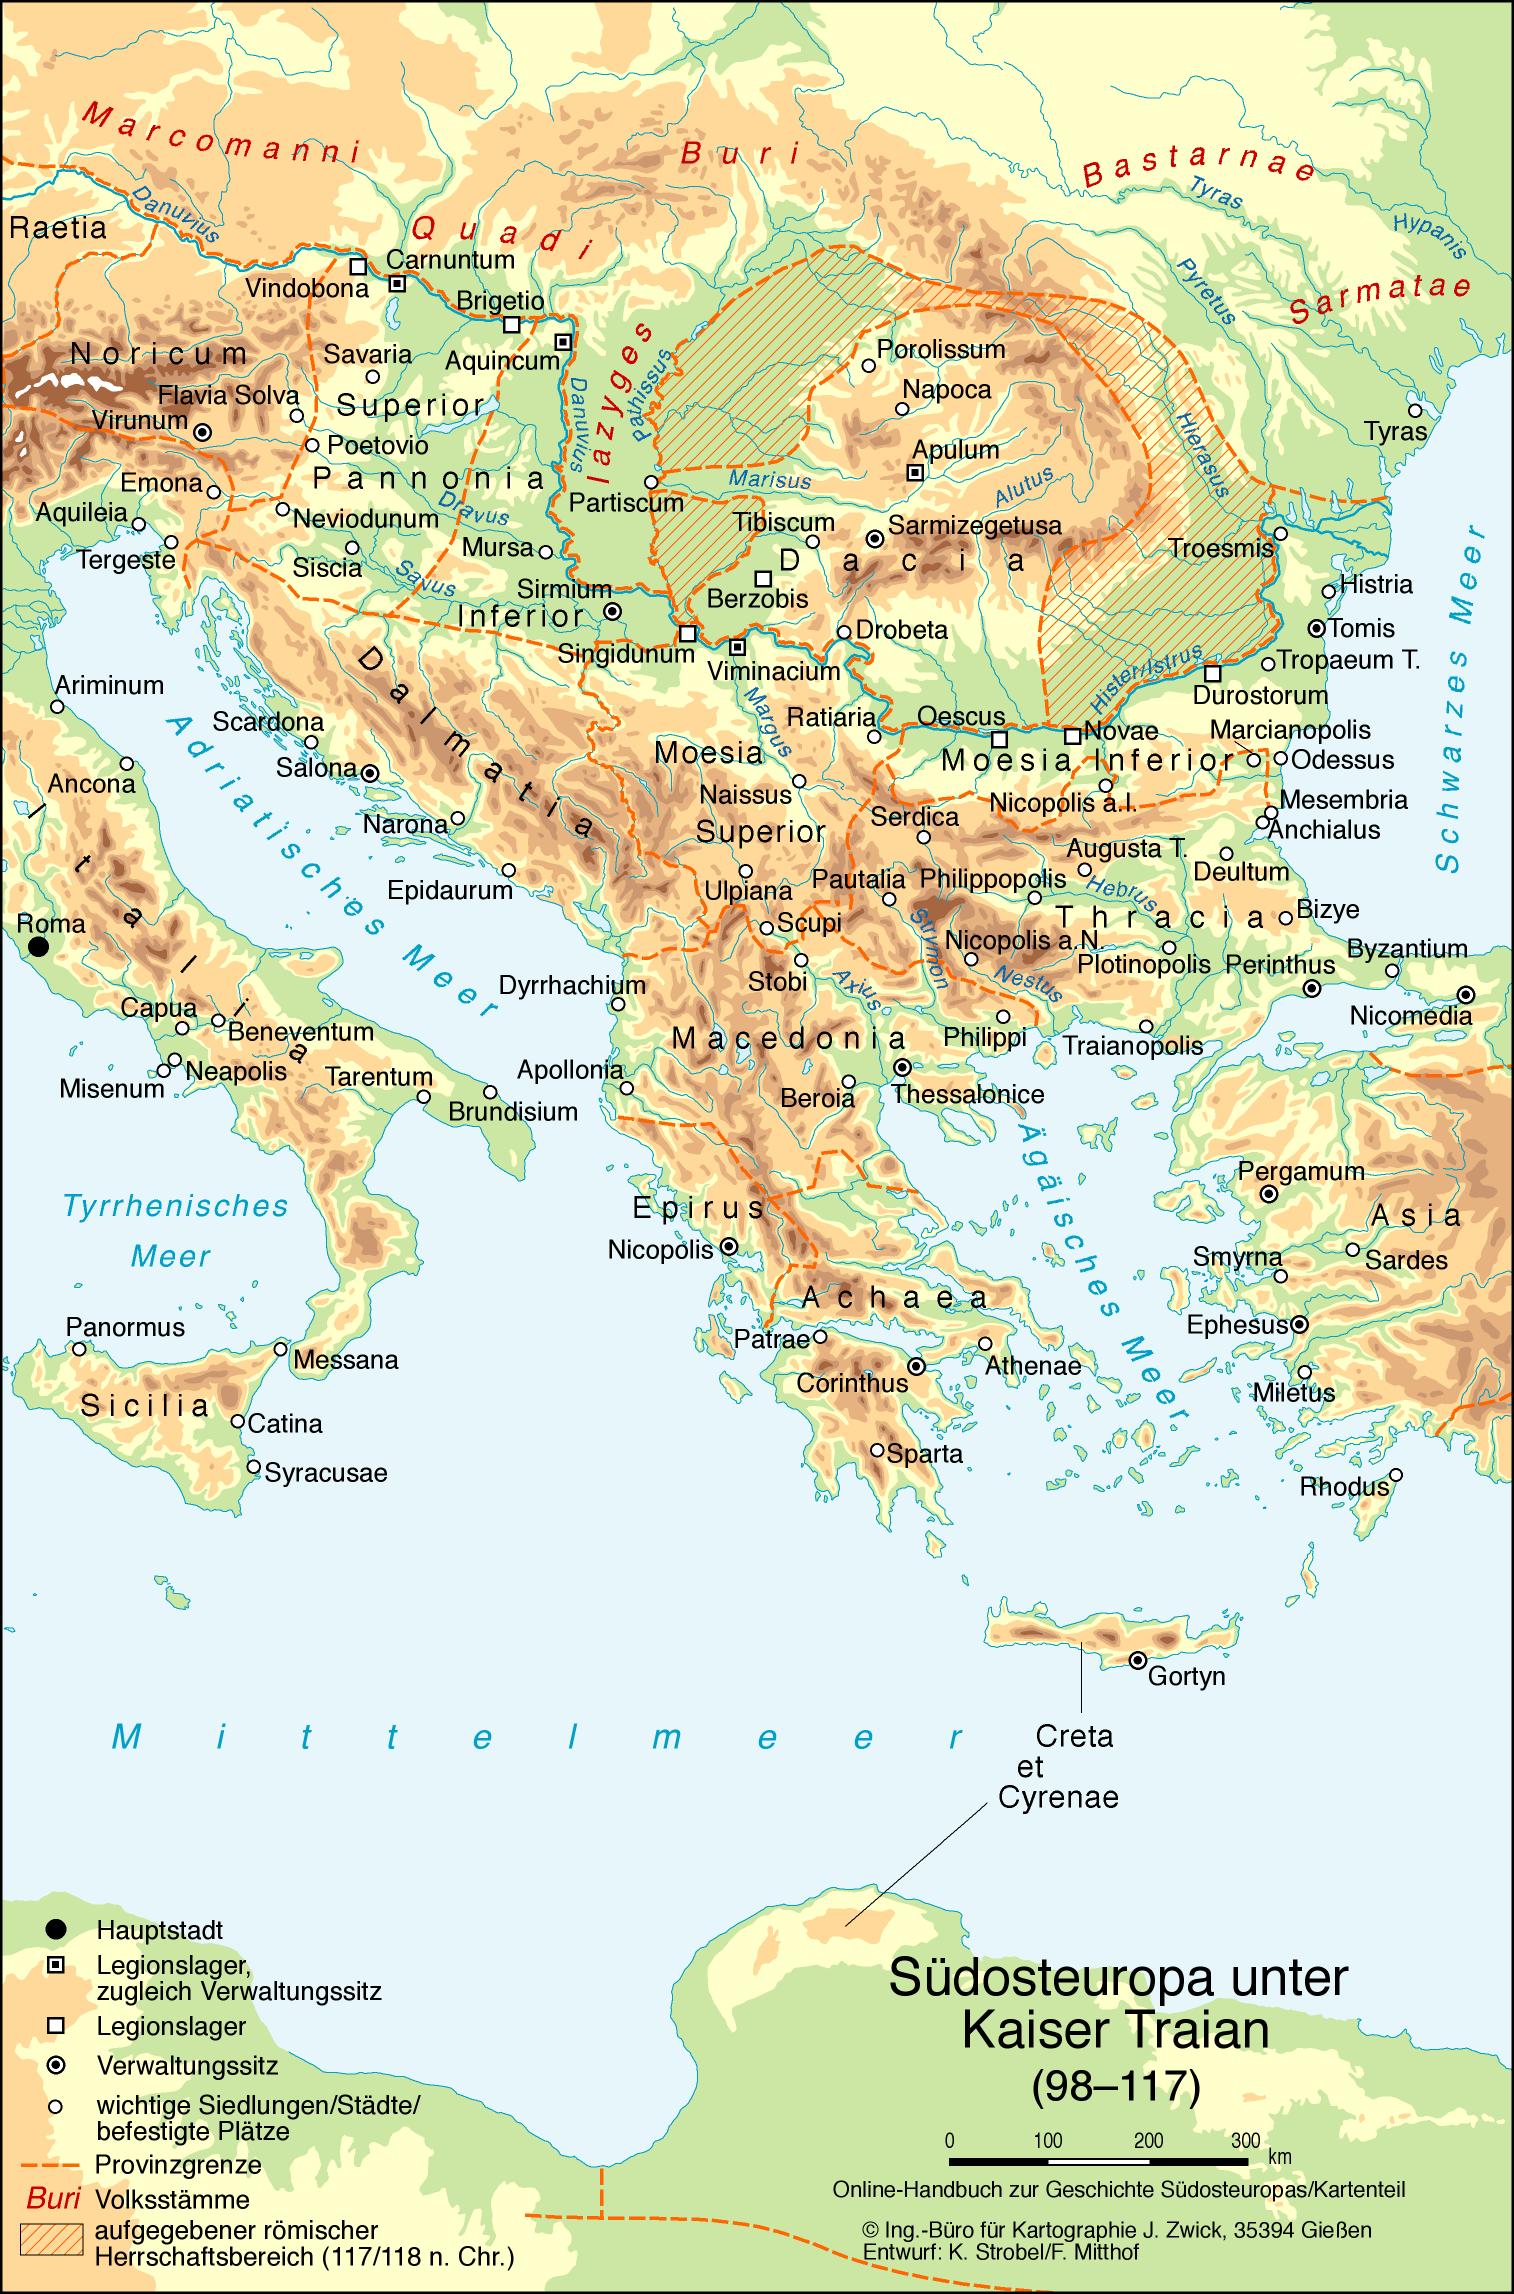 Südosteuropa unter Kaiser Traian (98-117)